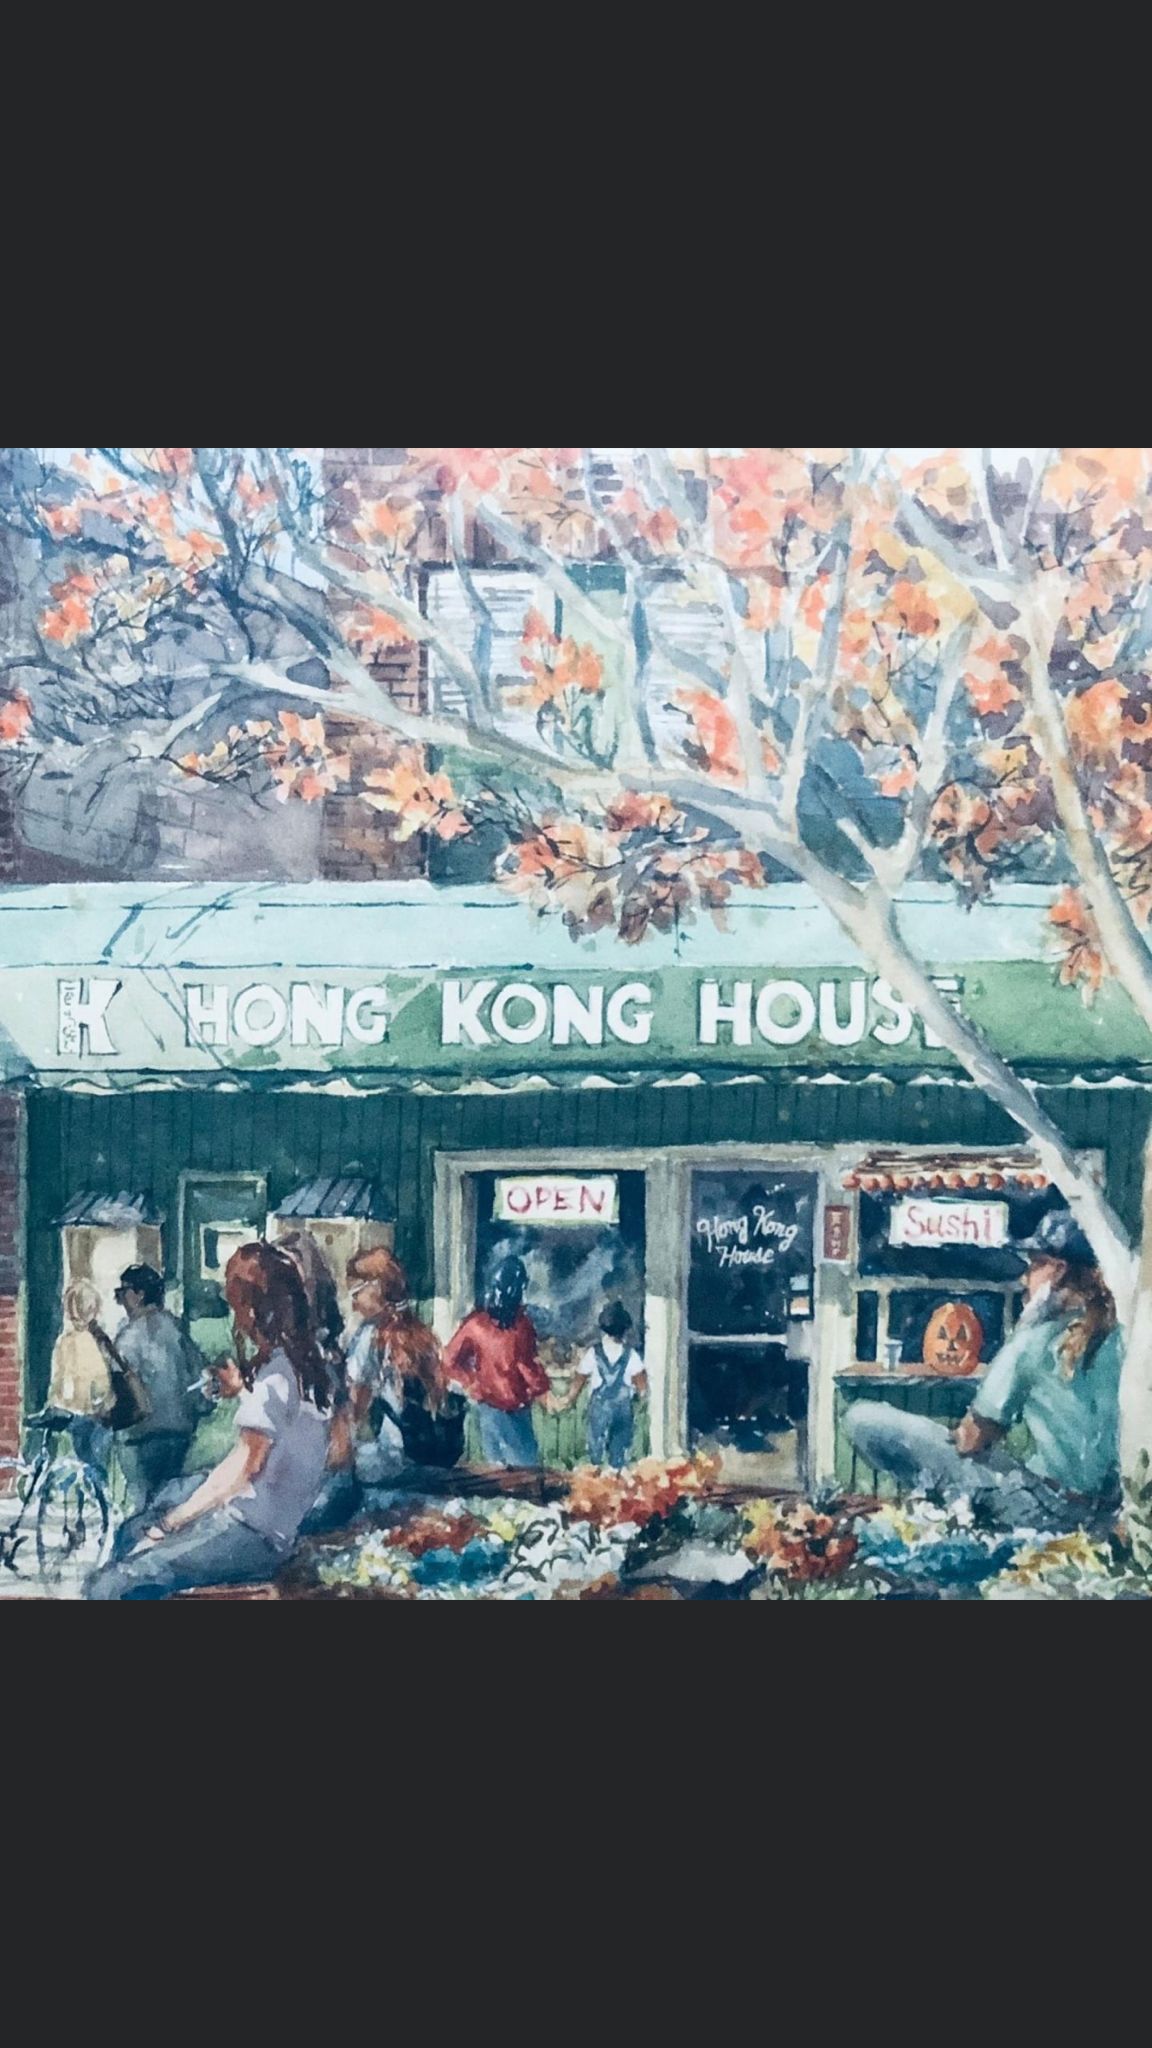 Hong Kong House